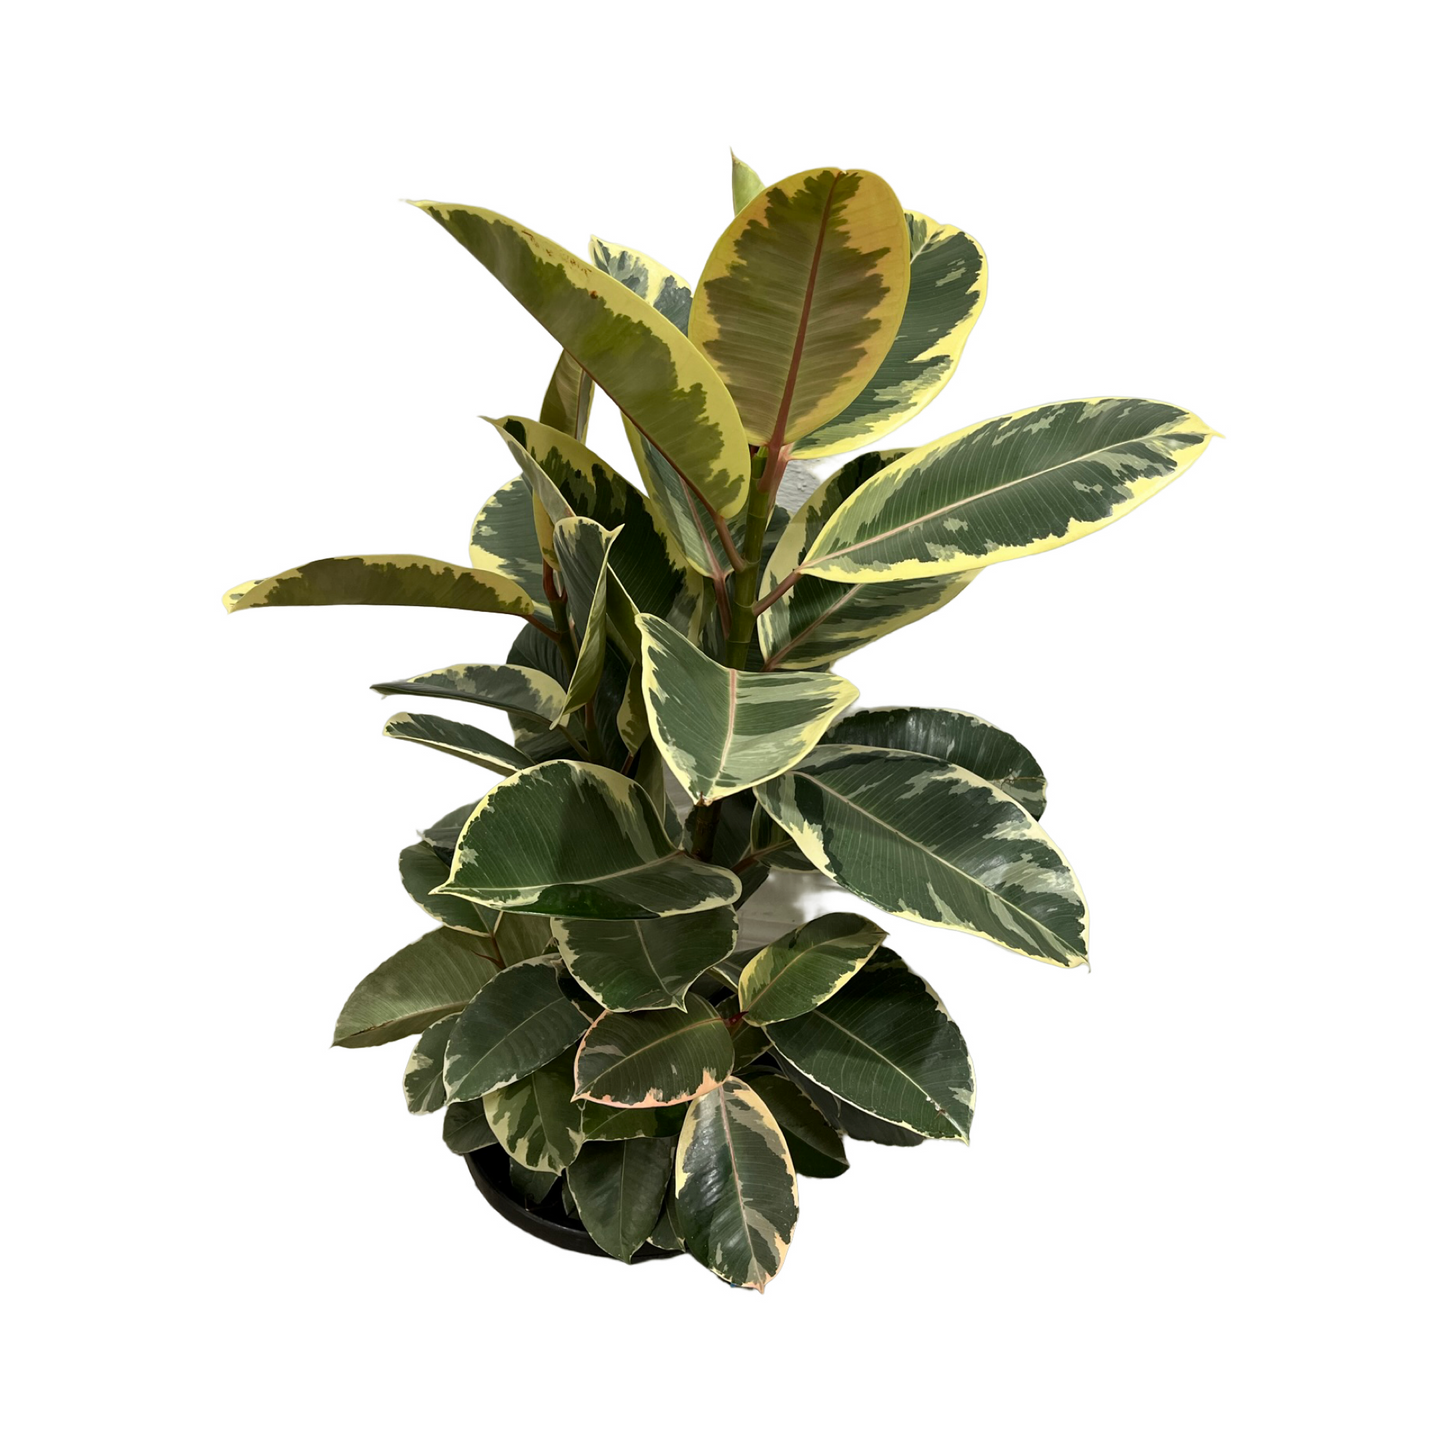 Assorted Ficus elastica Tineke 'Rubber Plant'